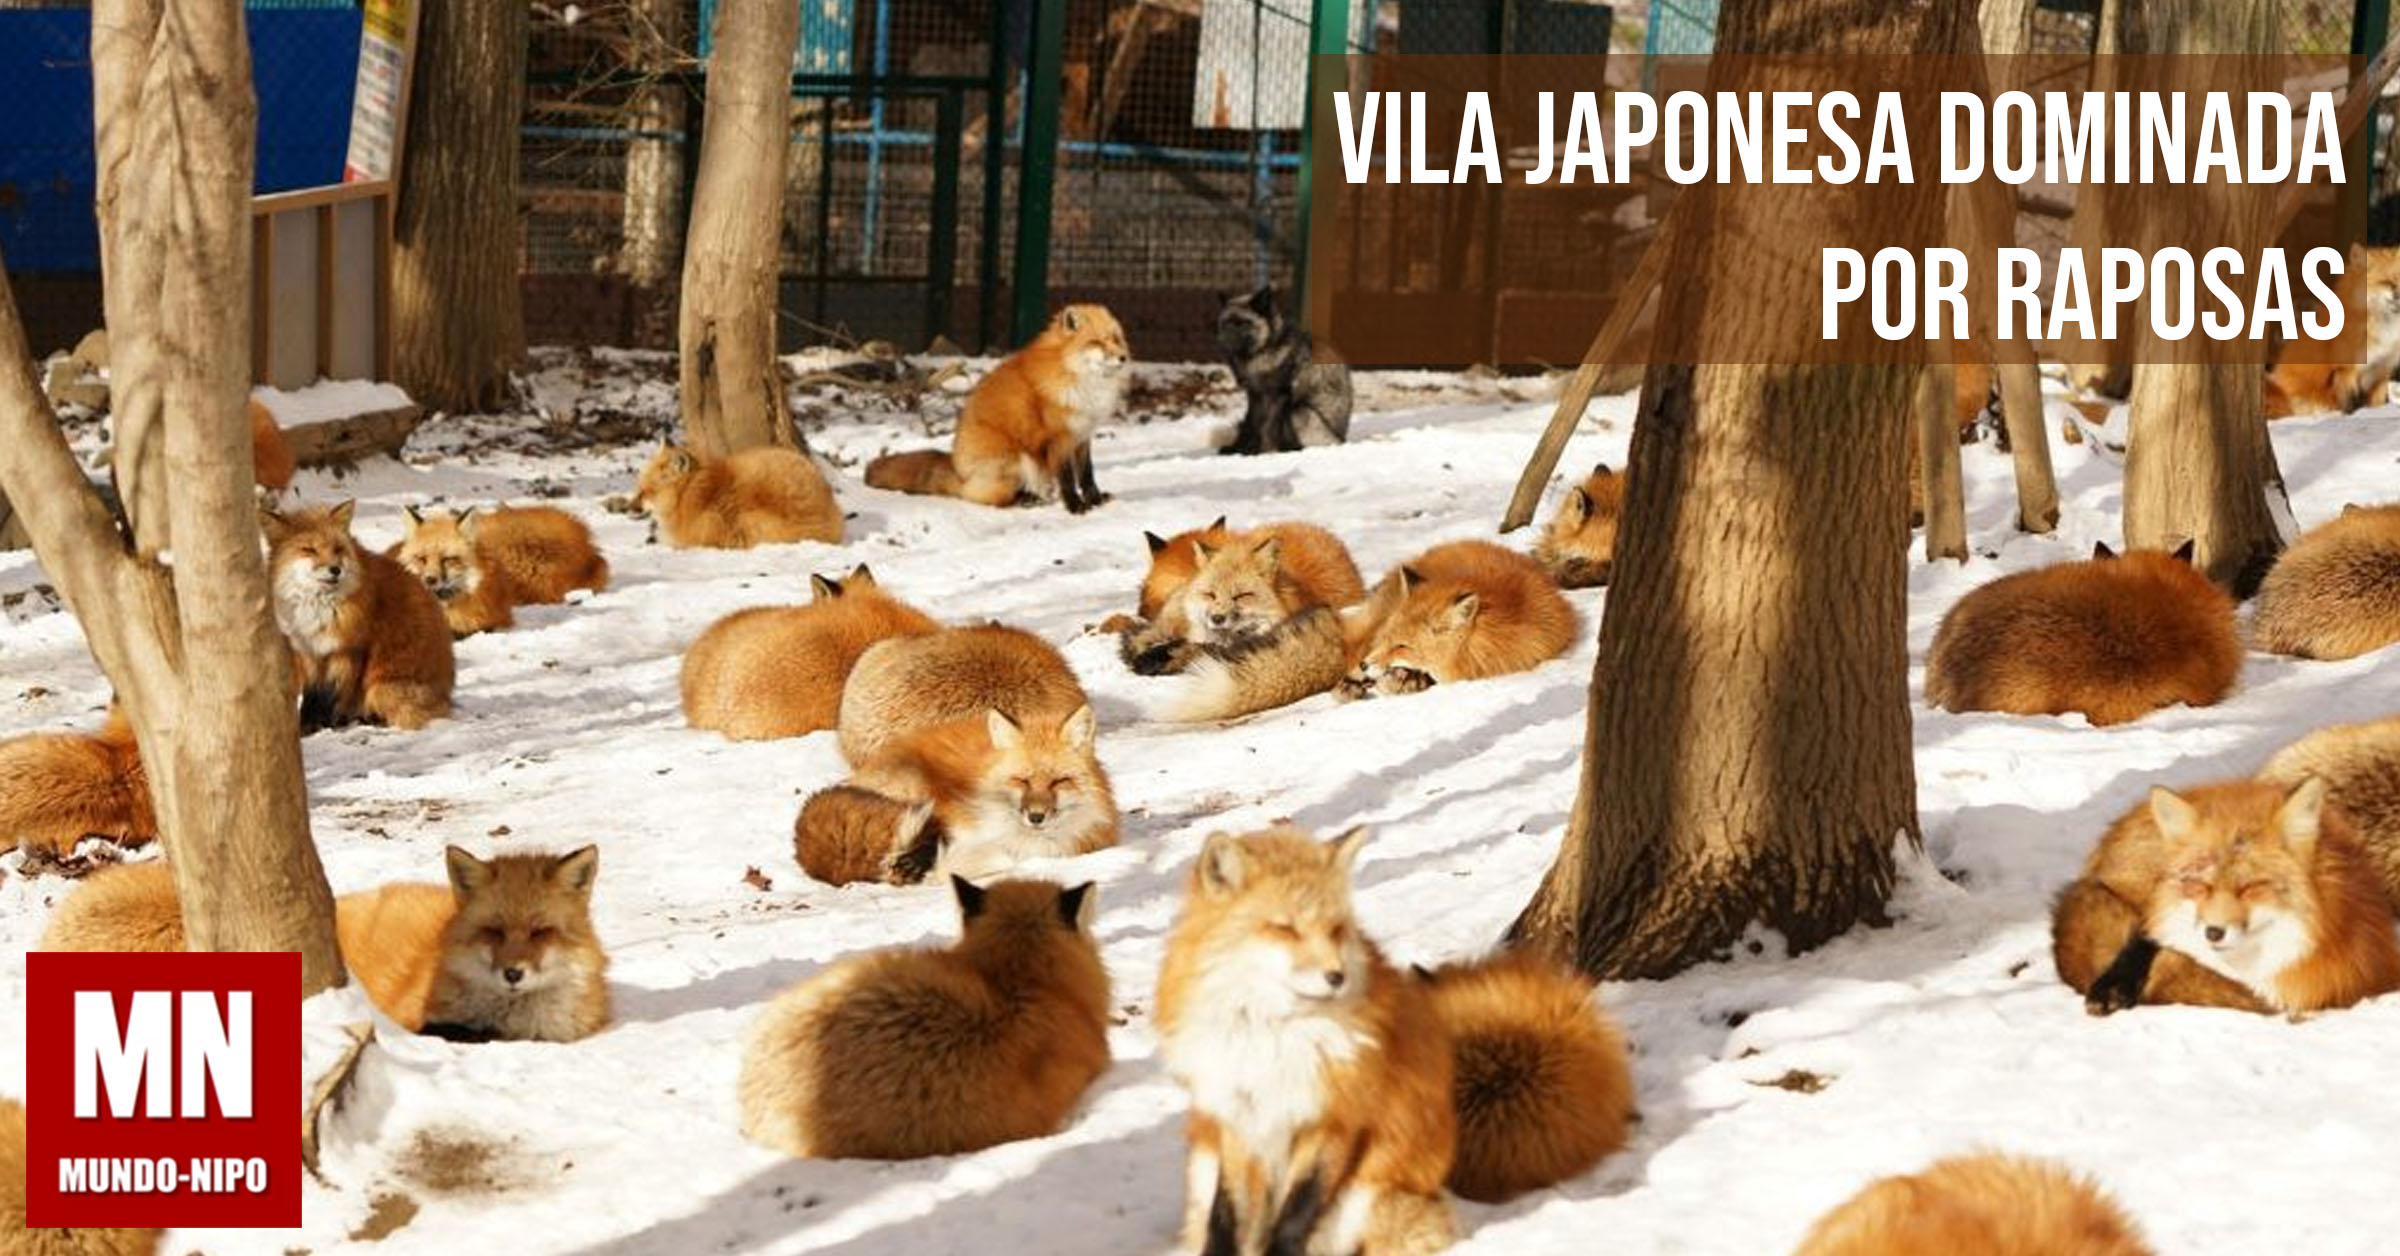 More foxes. Дзао-Кицунэ-Мура. Дзао Кицунэ Мура деревня. Дзао Кицунэ Мура, Япония — лисы. Лисья деревня в Японии.